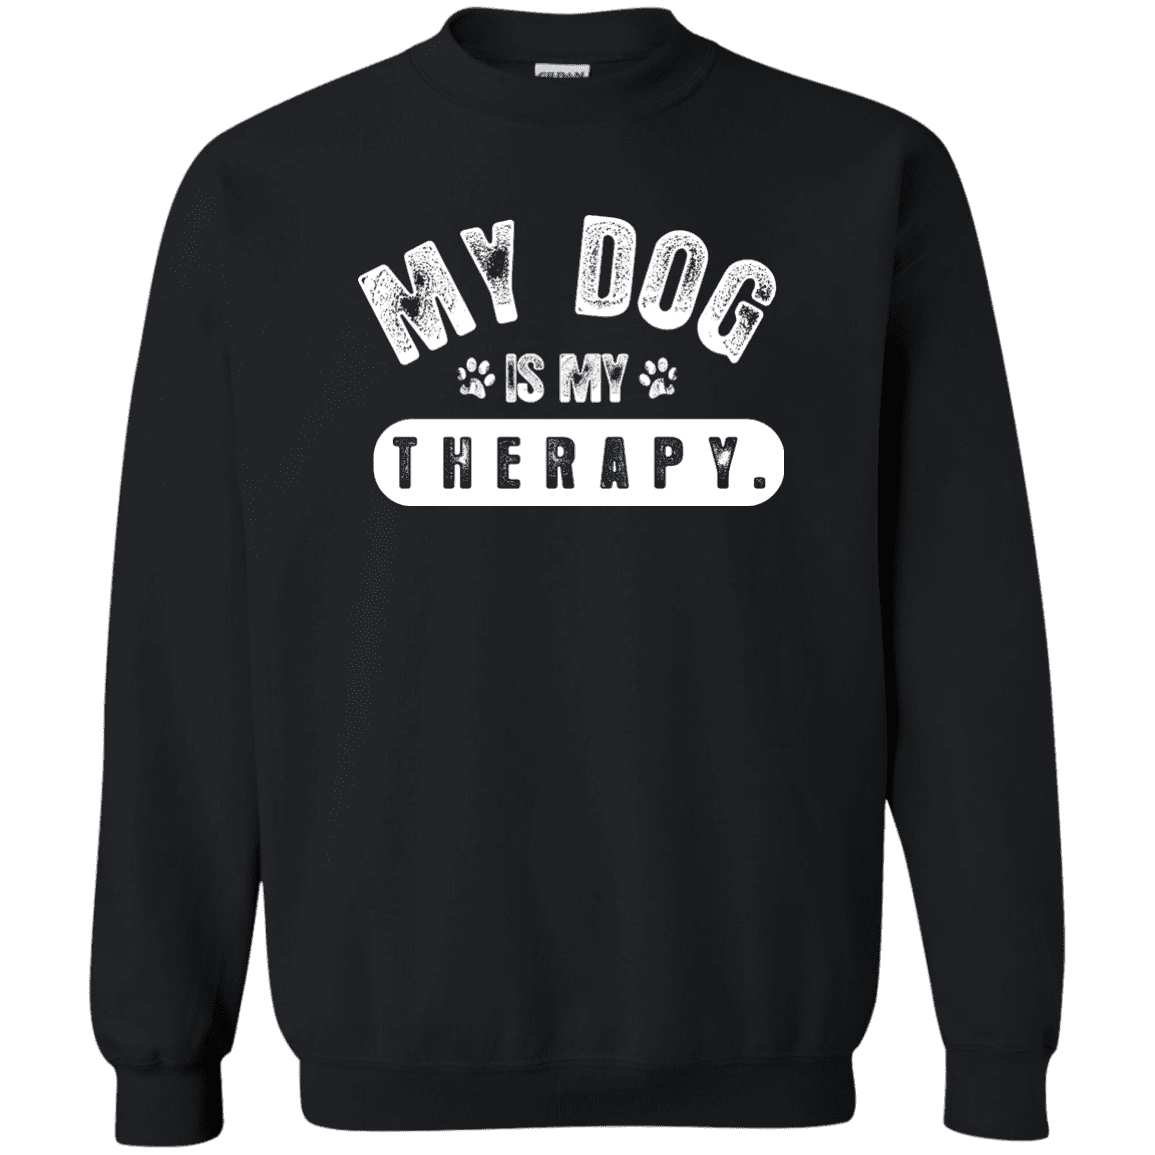 My Dog Is My Therapy - Sweatshirt.